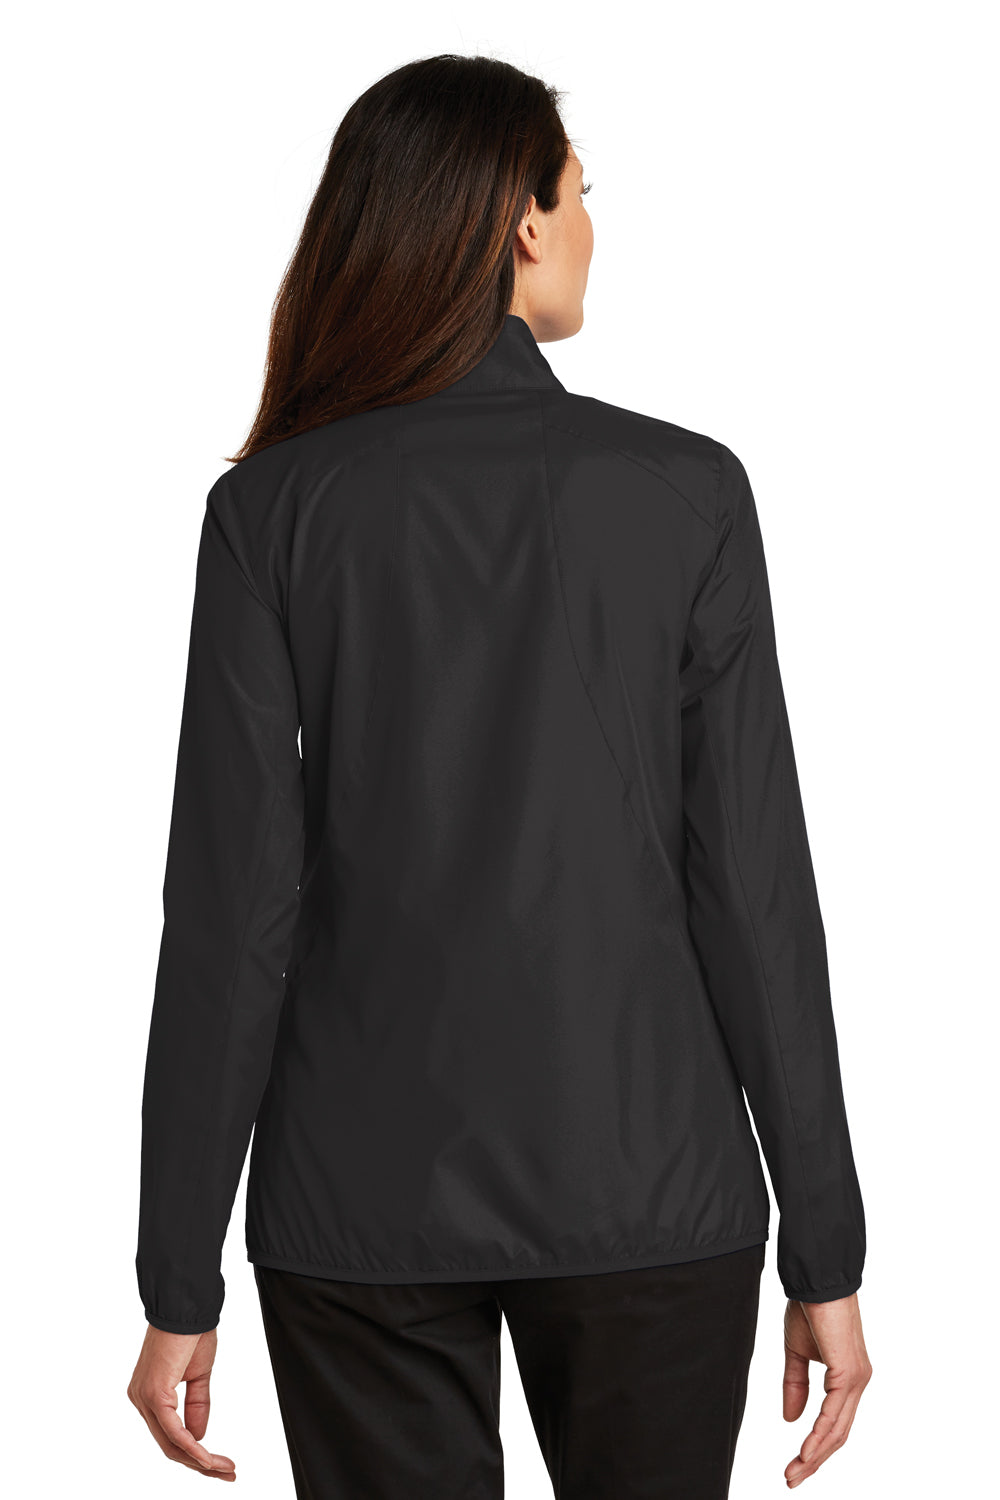 Port Authority L344 Womens Zephyr Wind & Water Resistant Full Zip Jacket Black Back